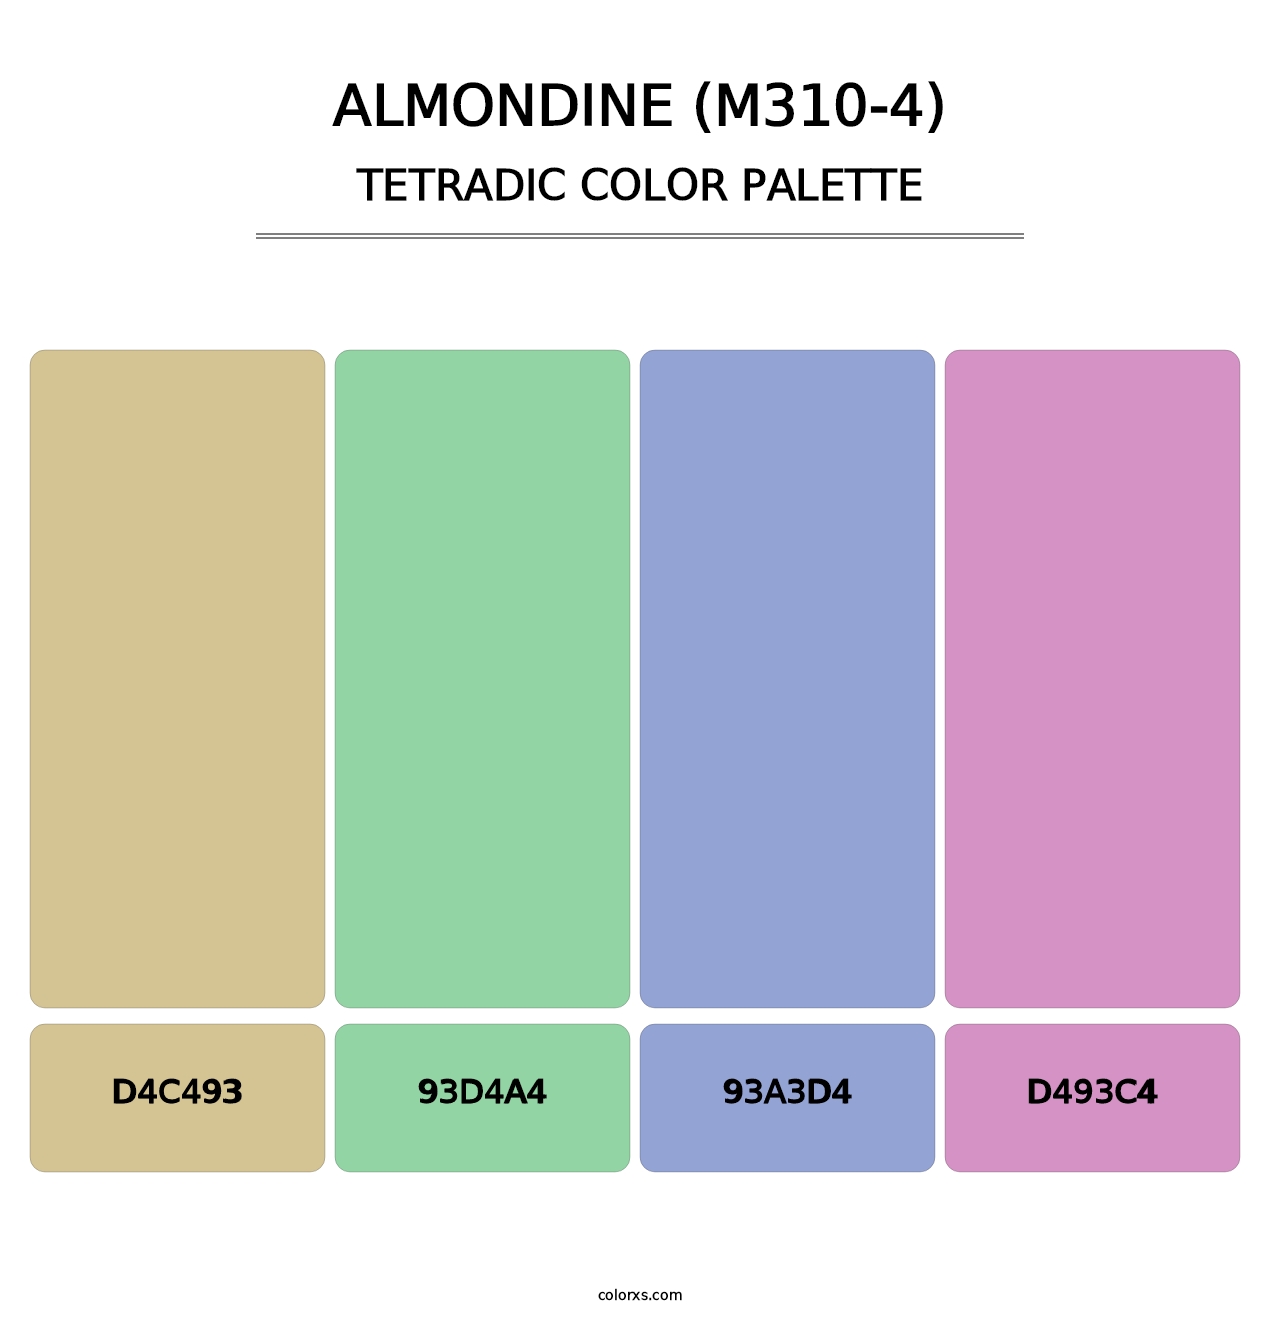 Almondine (M310-4) - Tetradic Color Palette